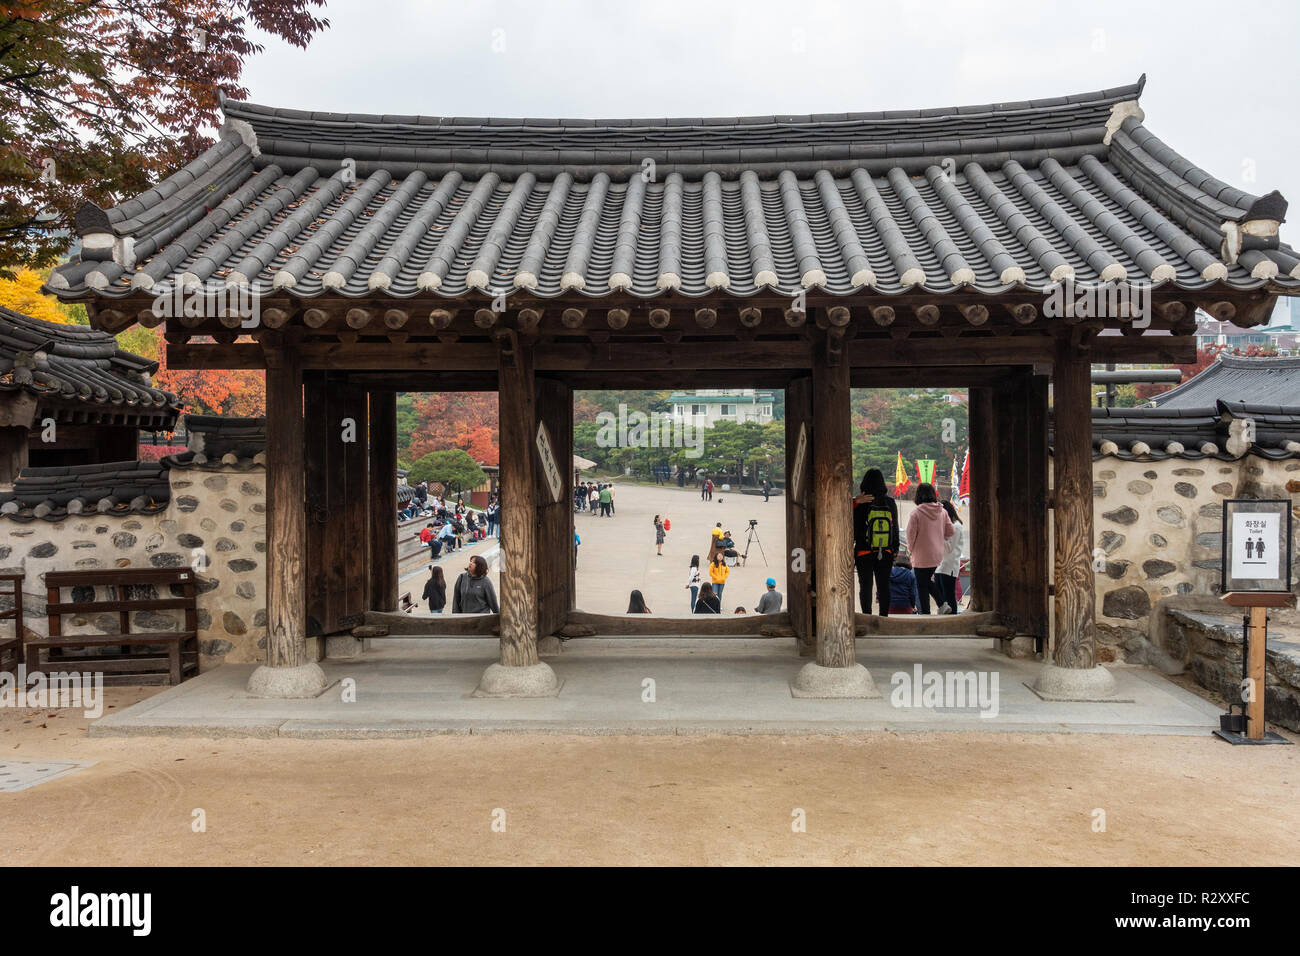 Gate house at Namsangol Hanok Village in Seoul, South Korea Stock Photo